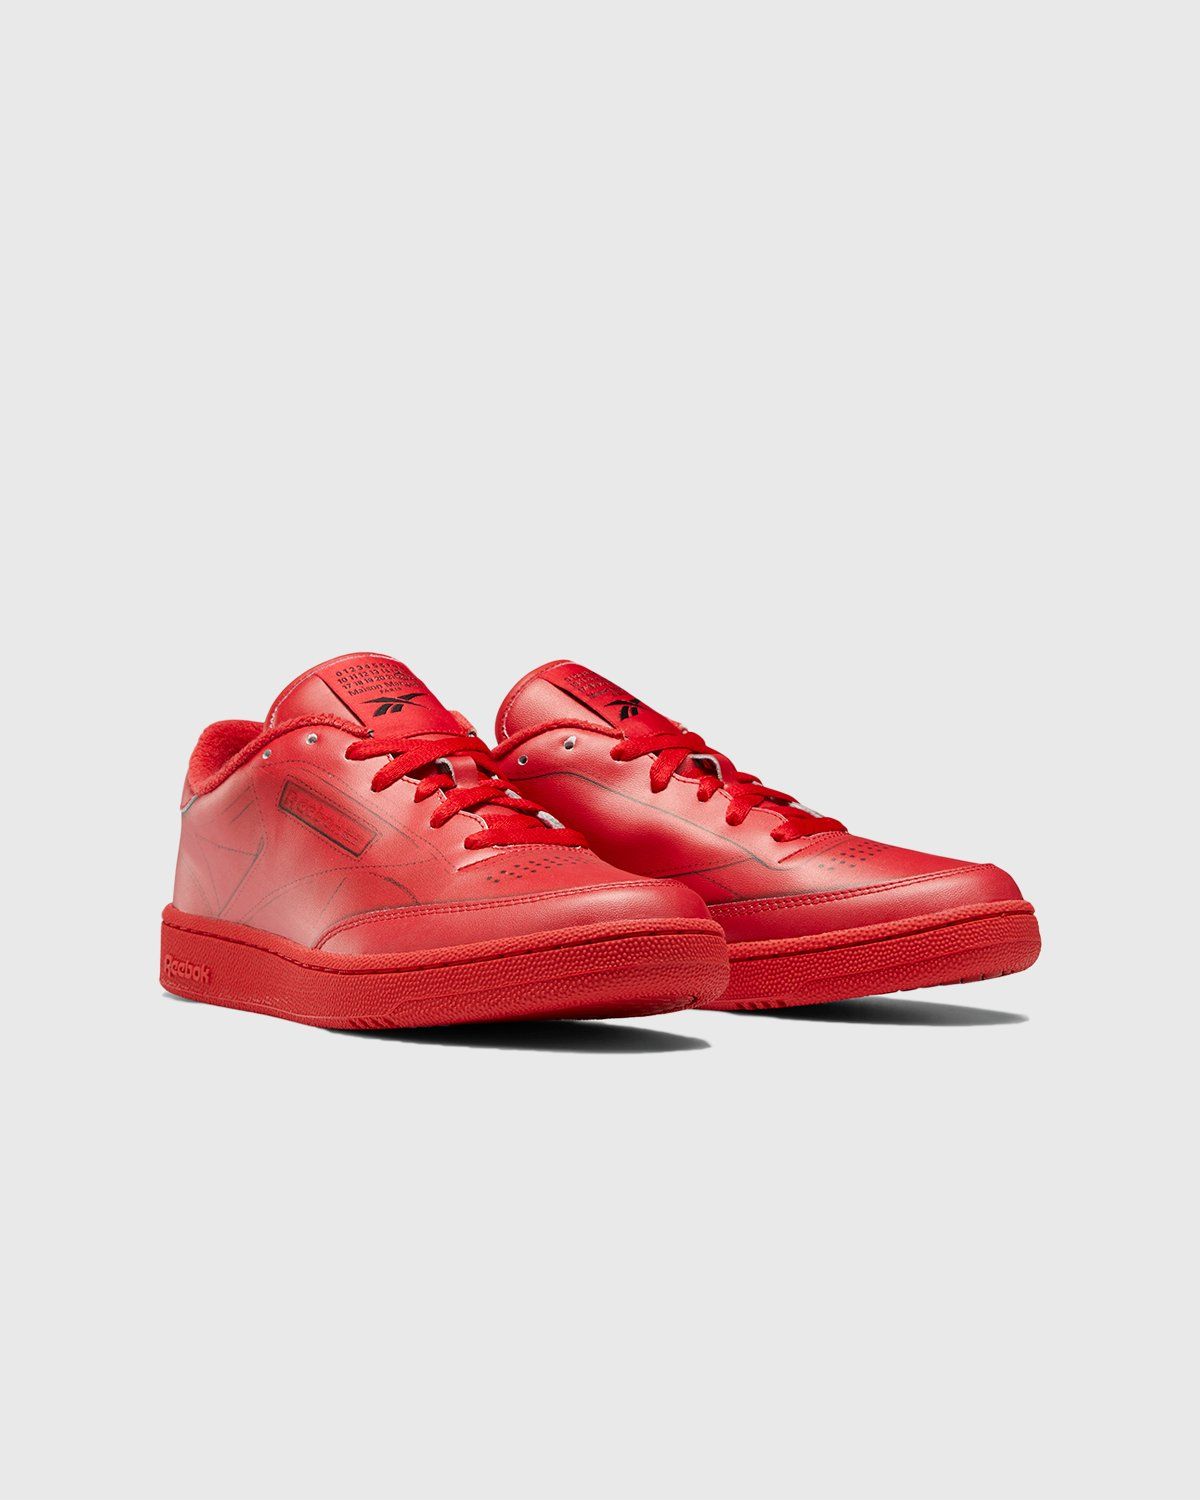 Maison Margiela x Reebok – Club C Trompe L’Oeil Red - Sneakers - Red - Image 2